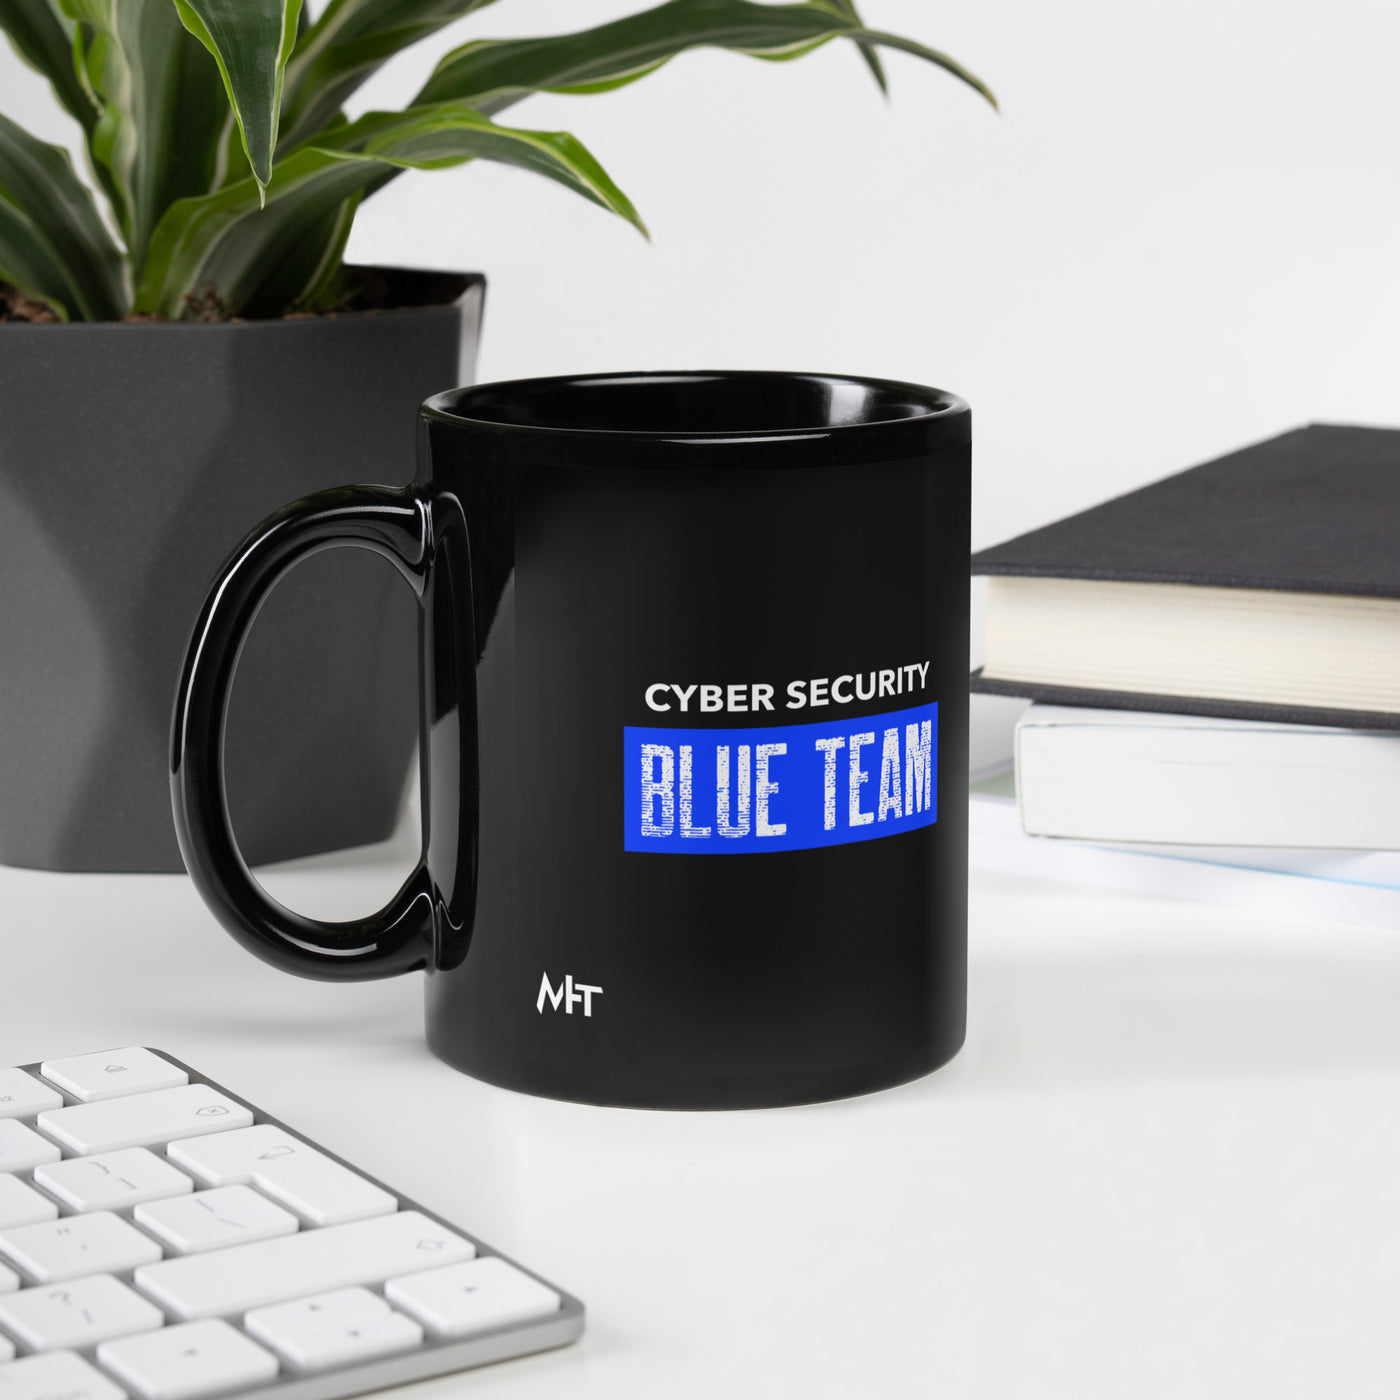 Cyber Security Blue Team V5 - Black Glossy Mug